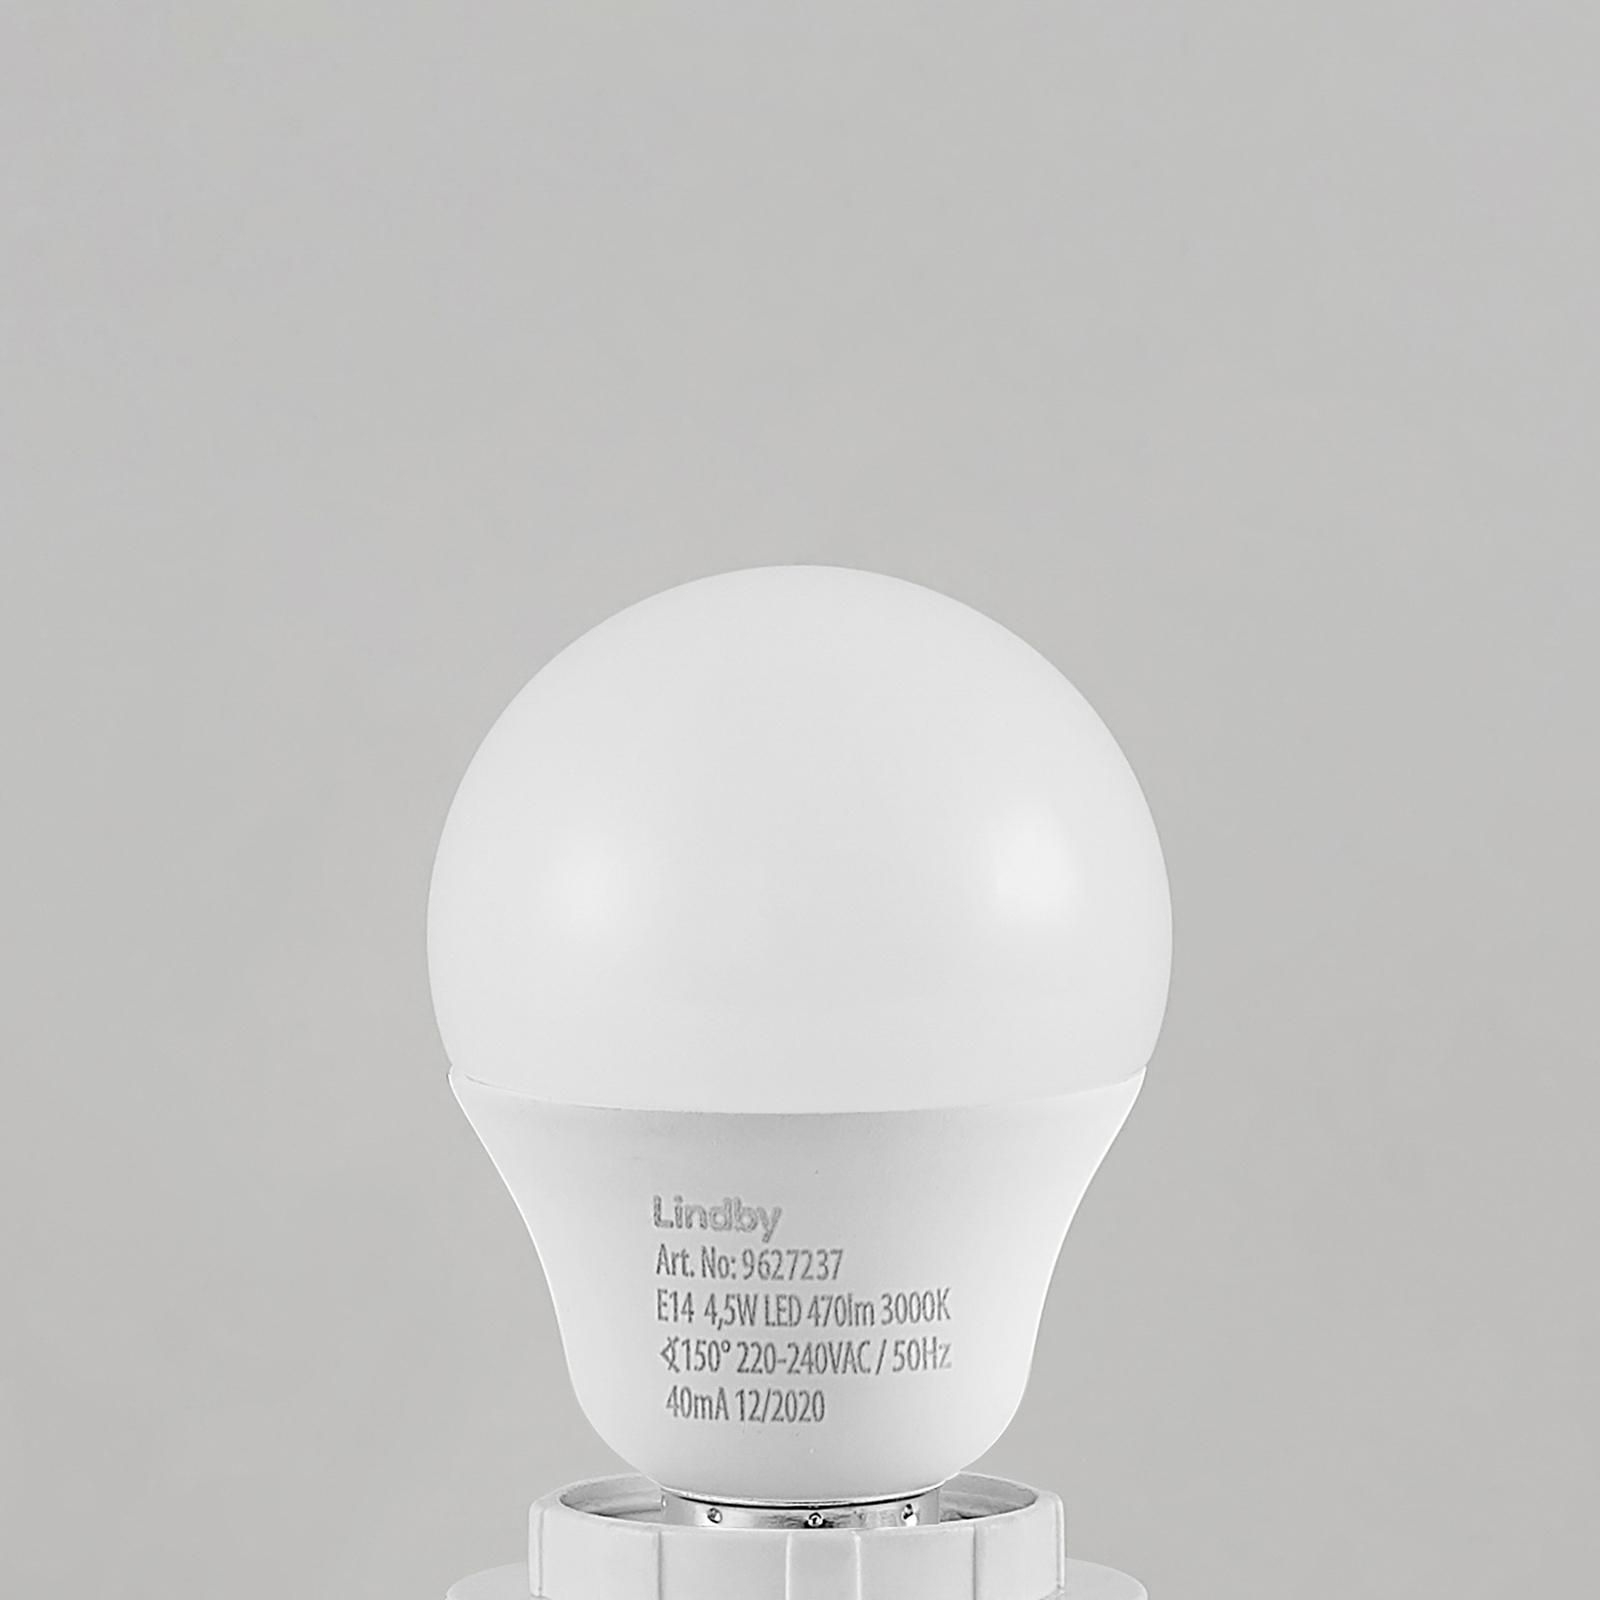 Lindby LED žiarovka E14 G45 4,5W 3 000K opál 10 ks